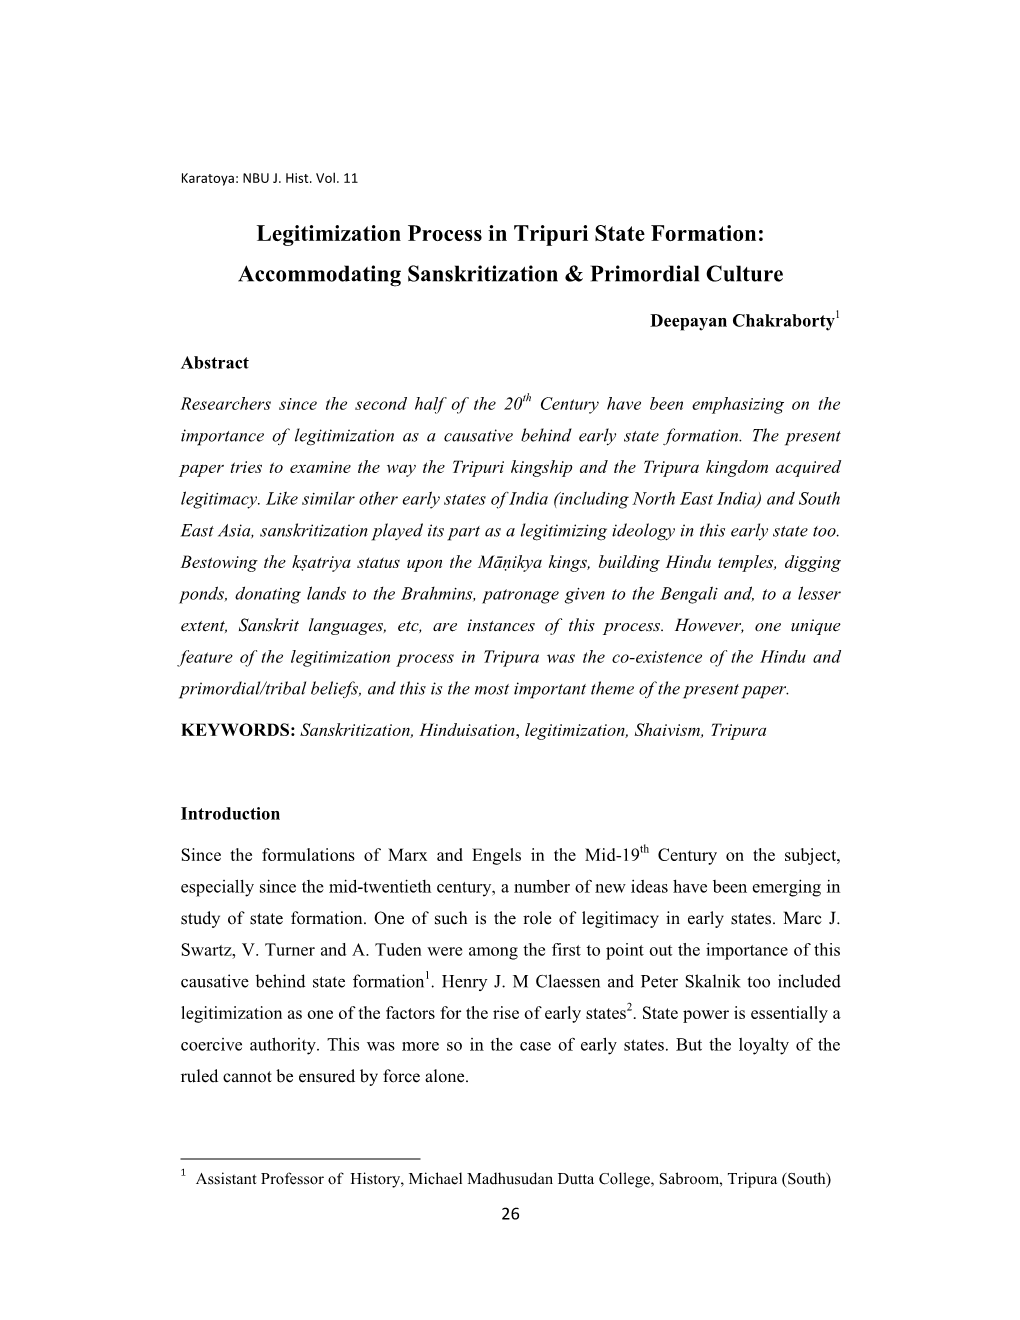 Legitimization Process in Tripuri State Formation: Accommodating Sanskritization & Primordial Culture